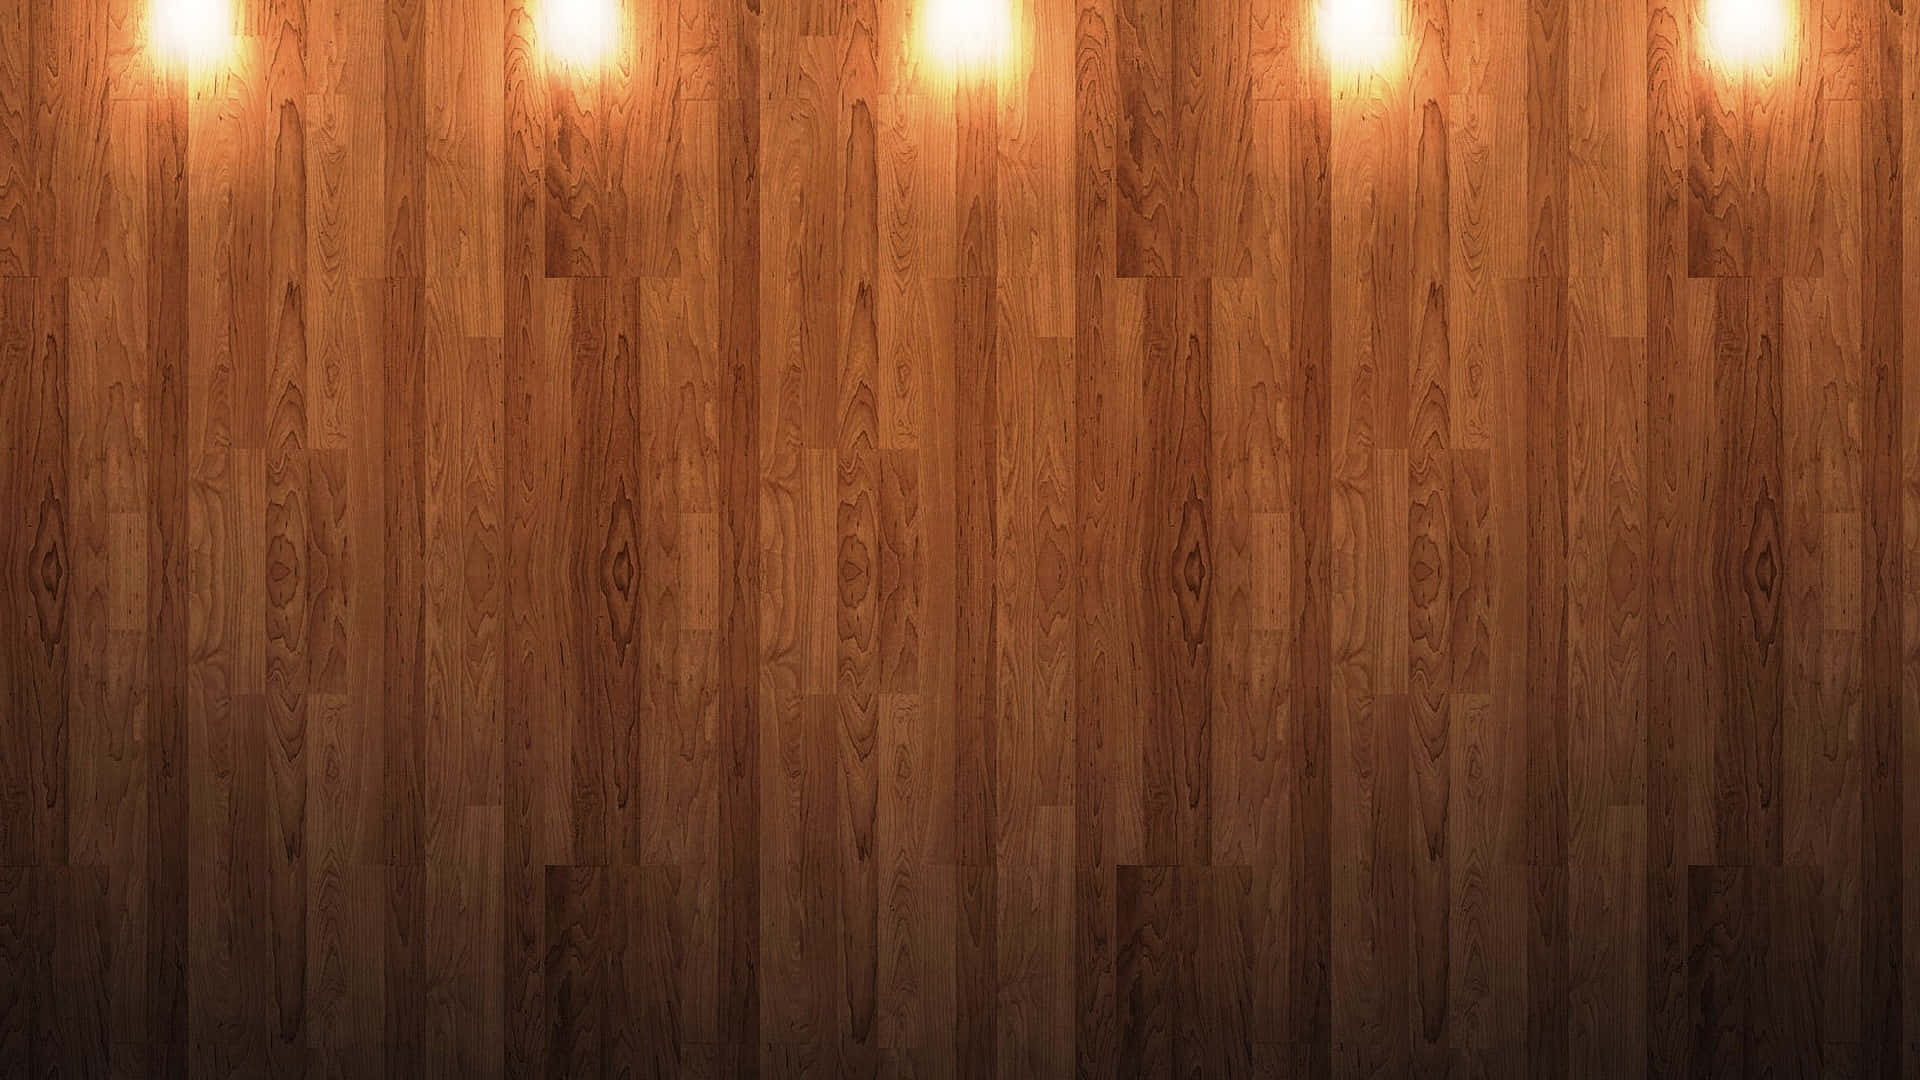 Enchanting Image Of Brown Wooden Texture Wallpaper